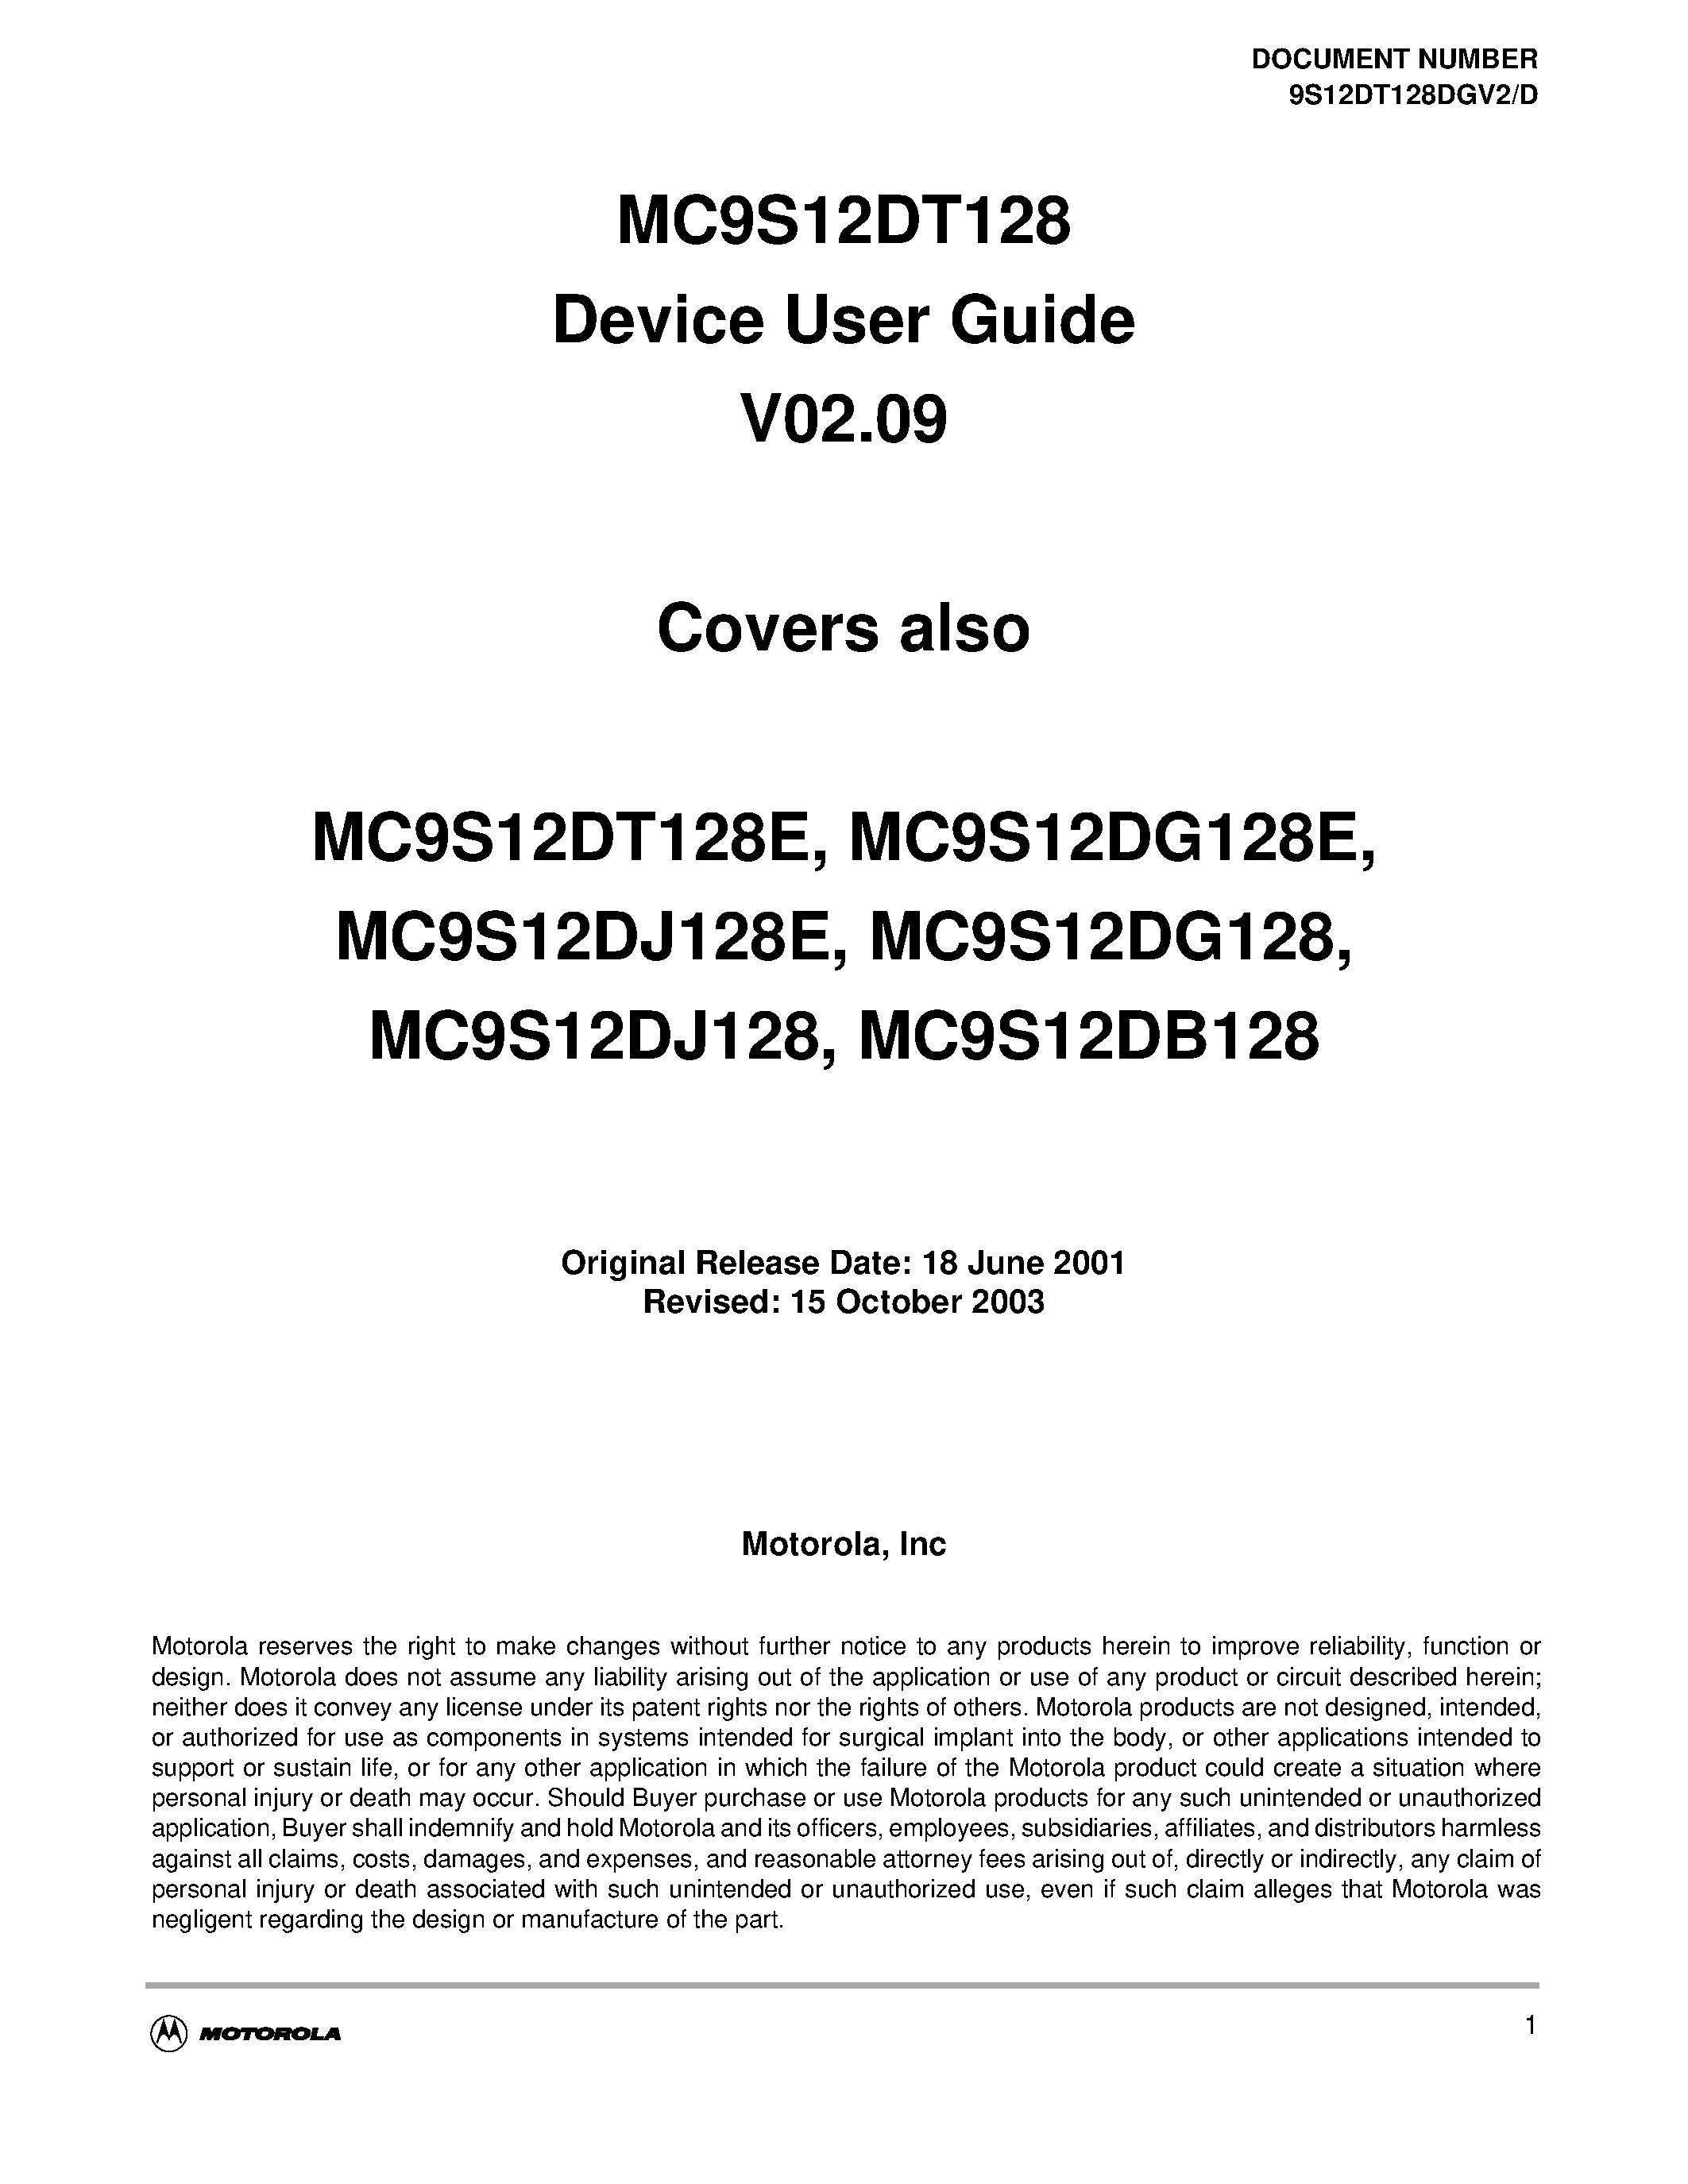 Даташит S12SPIV2D - MC9S12DT128 Device User Guide V02.09 страница 1